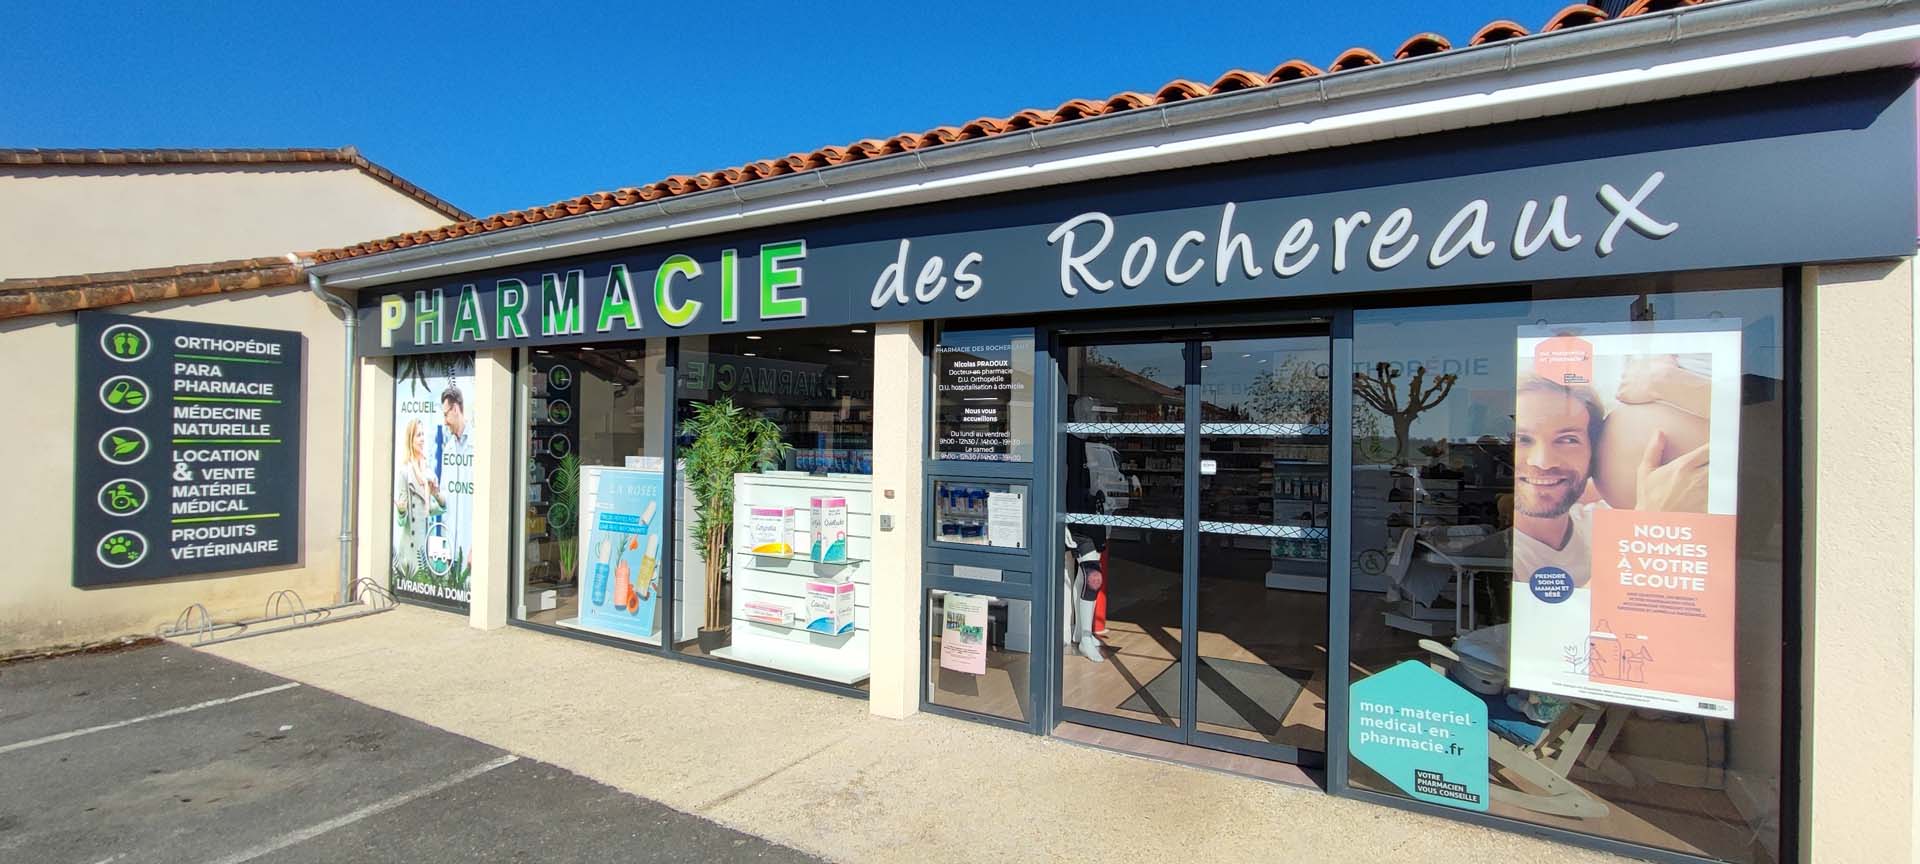 Pharmacie des Rochereaux (1)